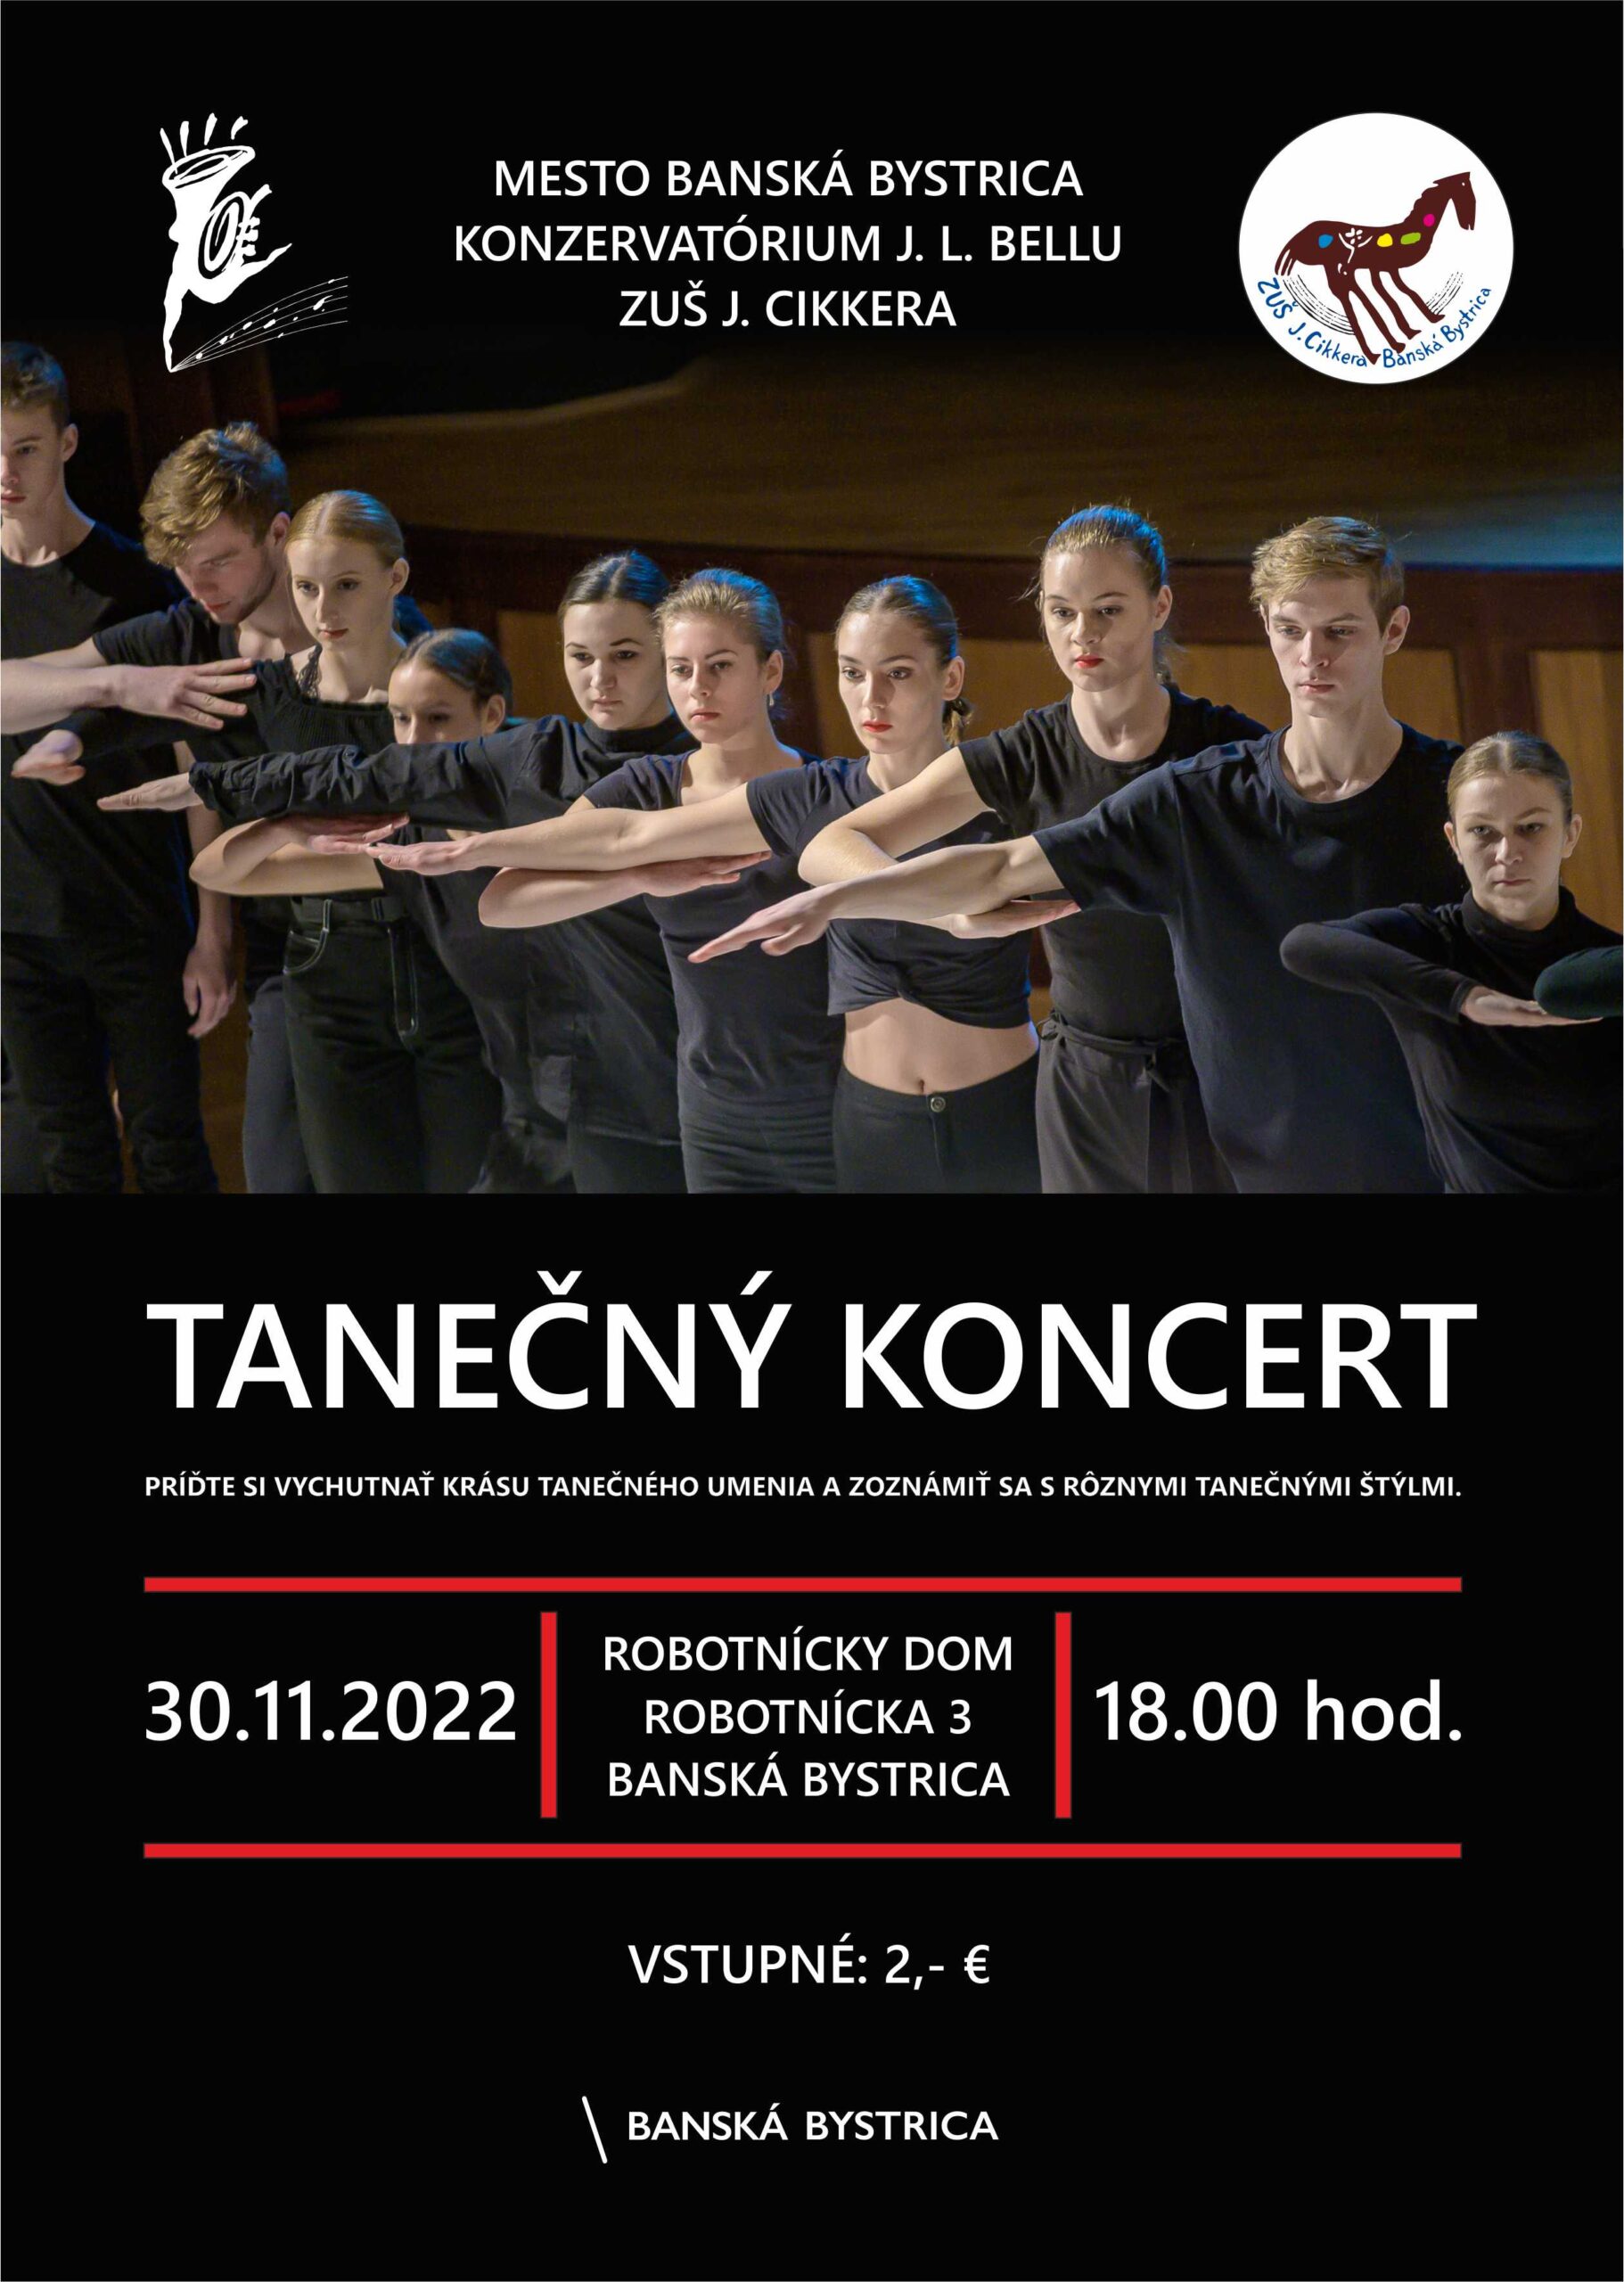 Tanečný koncert 30.11.2022 final